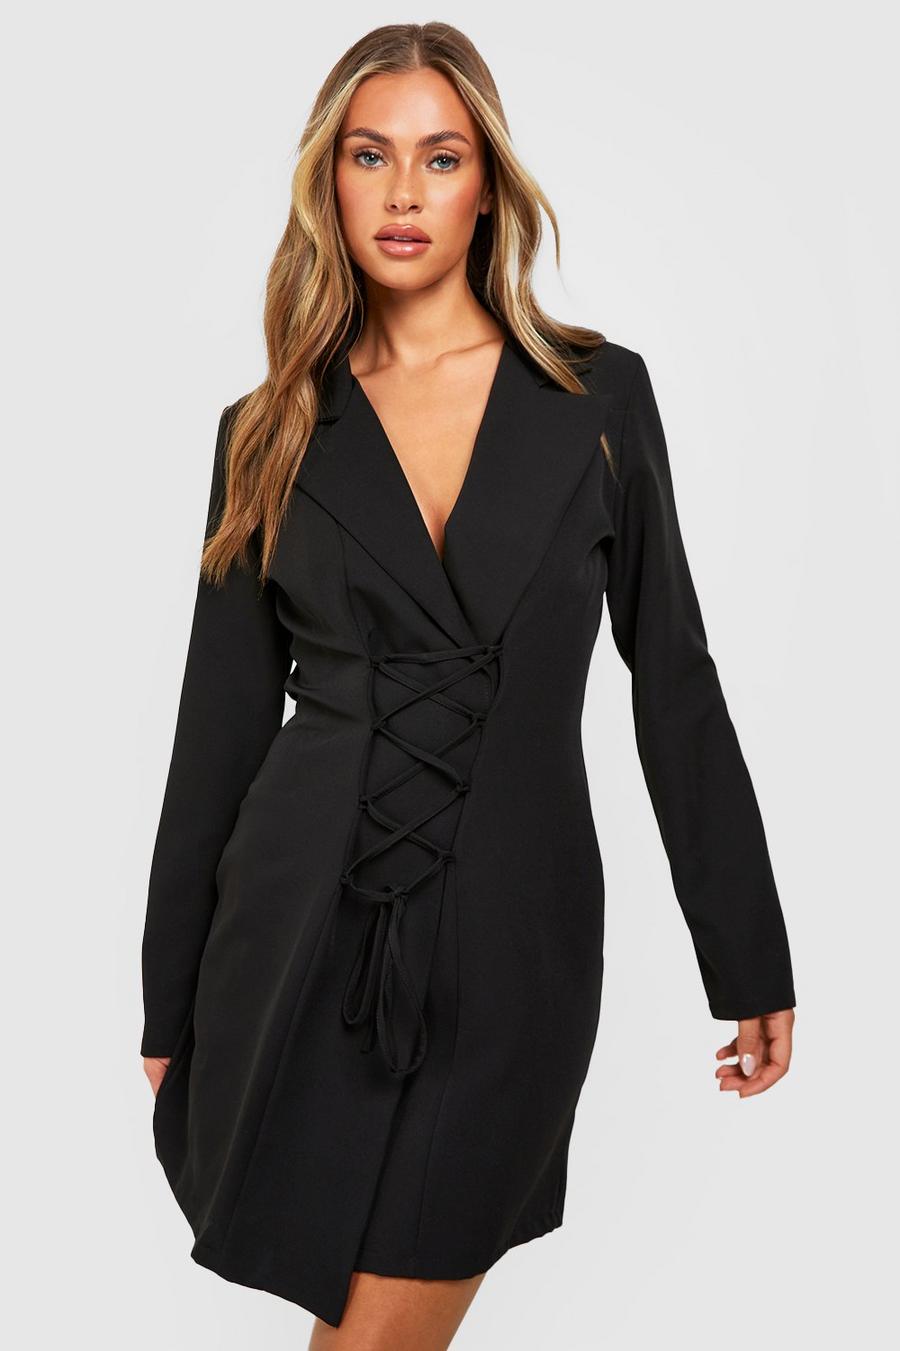 Black negro Lace Up Front Asymmetric Blazer Dress